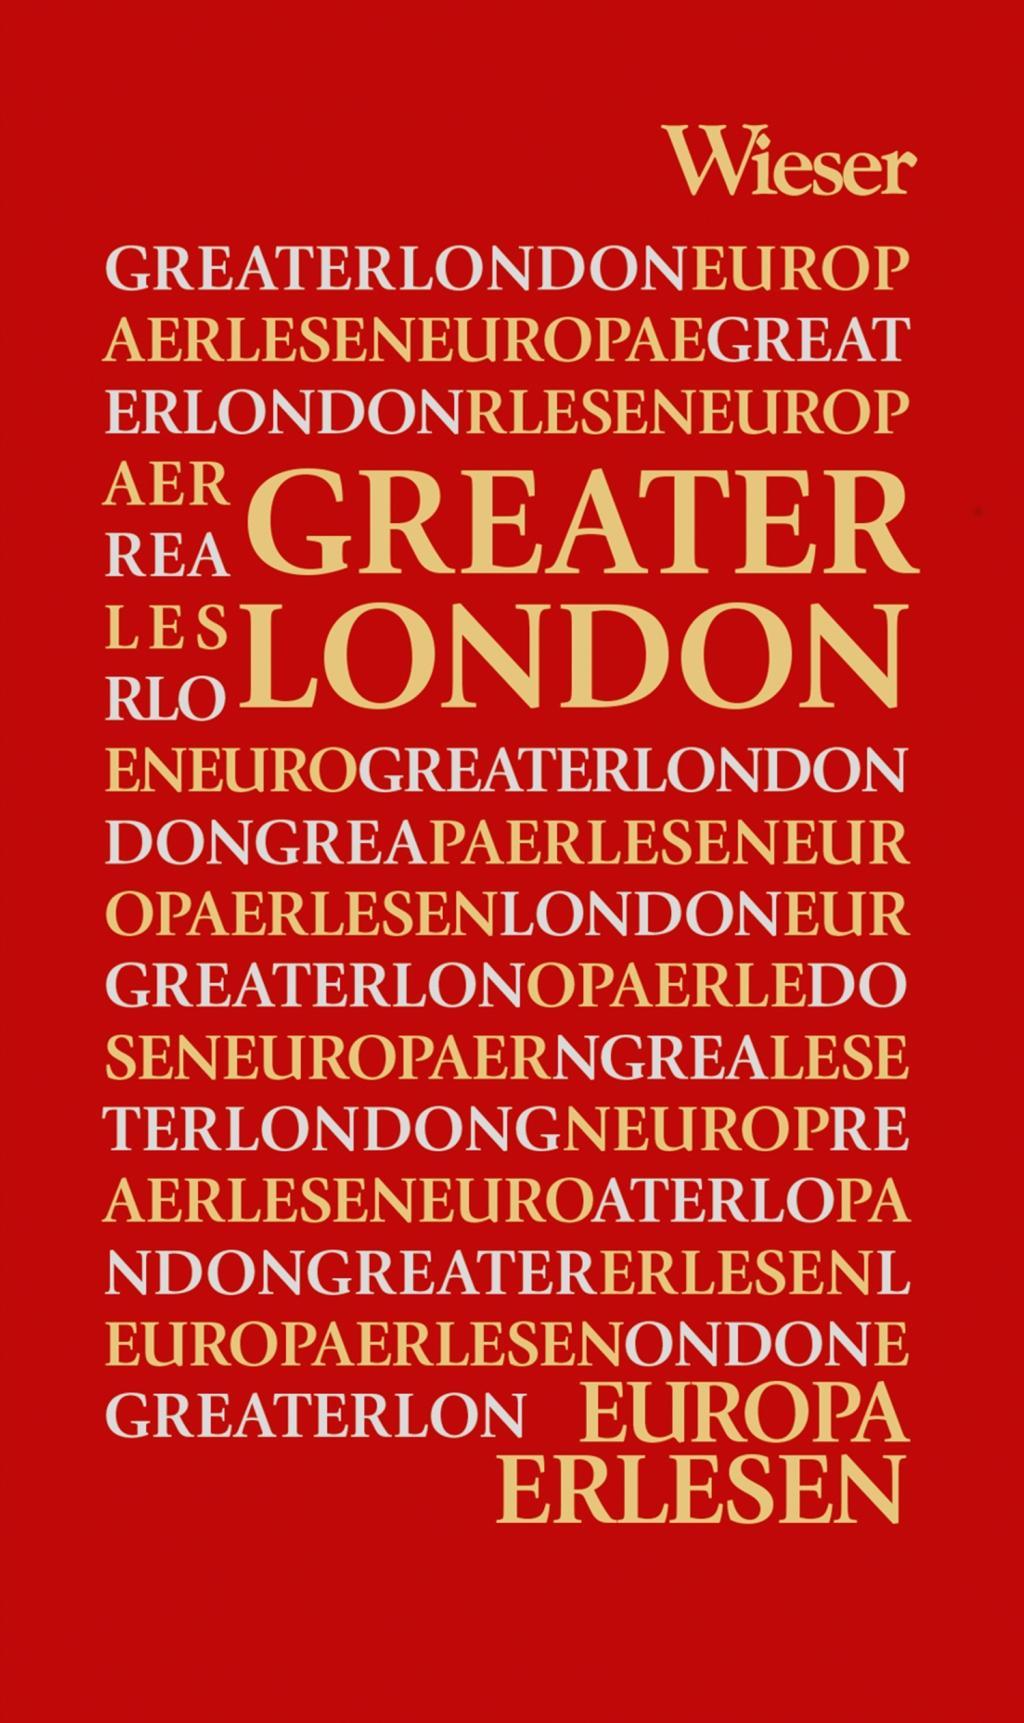 Europa Erlesen Greater London - Kohlwein, Thomas